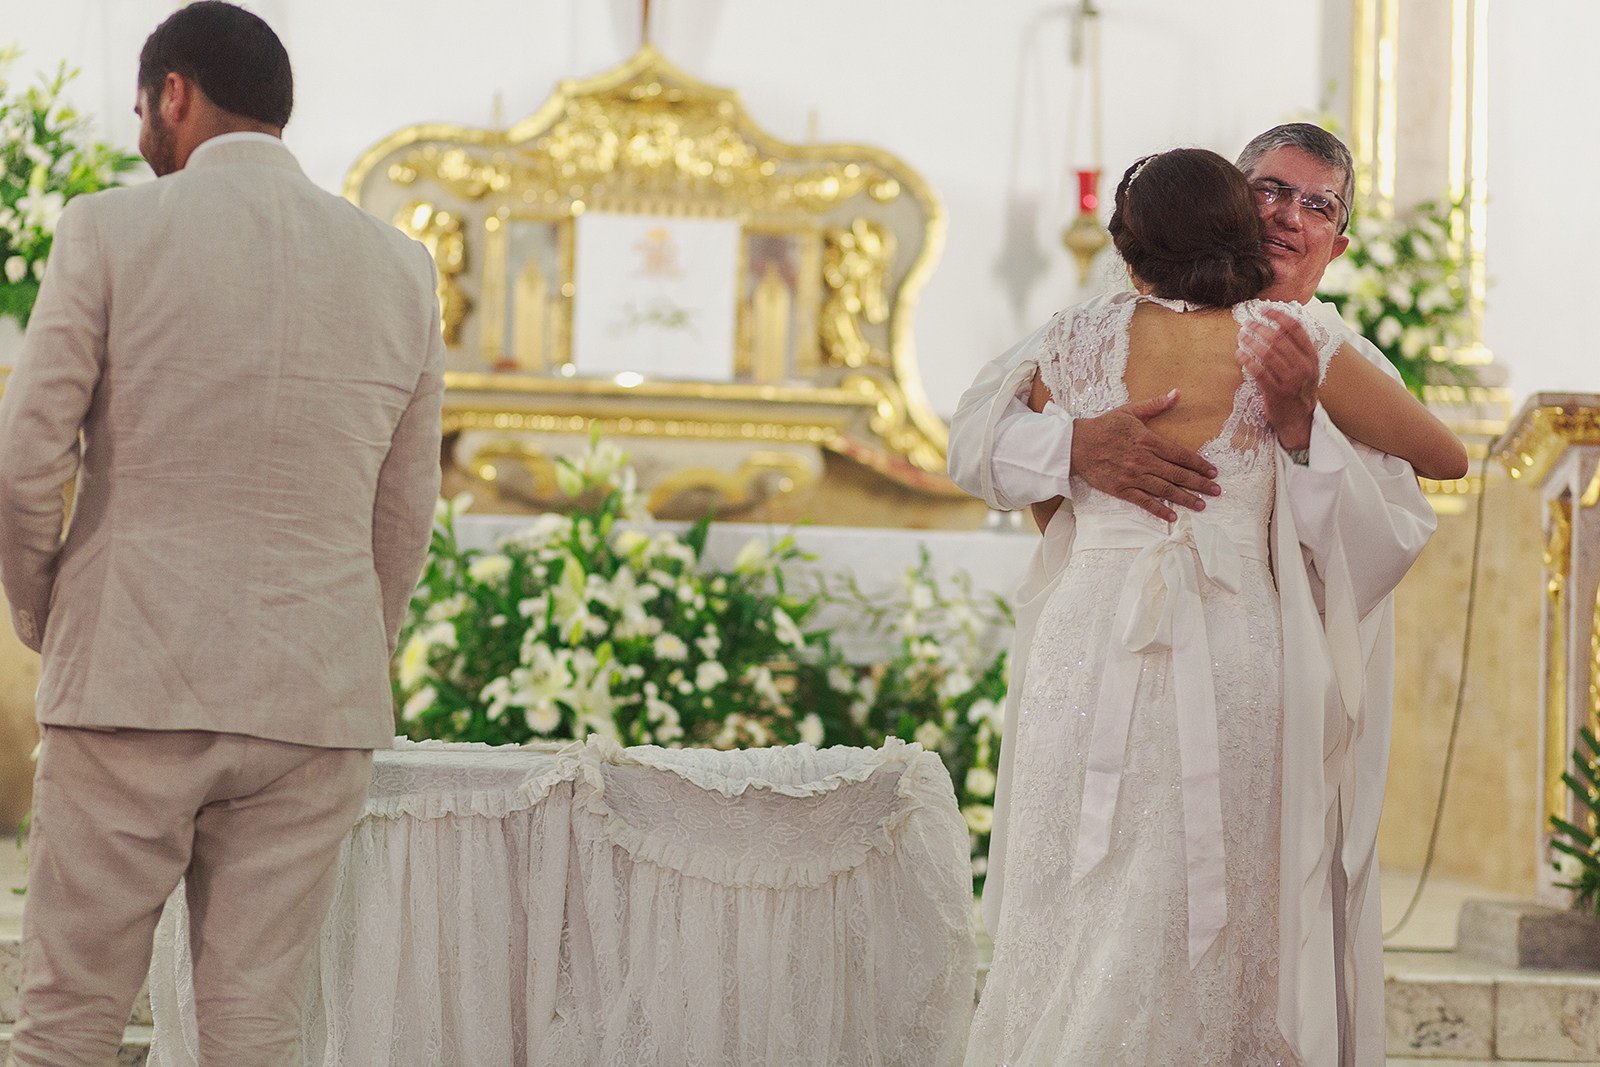 Sacerdote abraza a la novia tras terminar ceremonia de boda